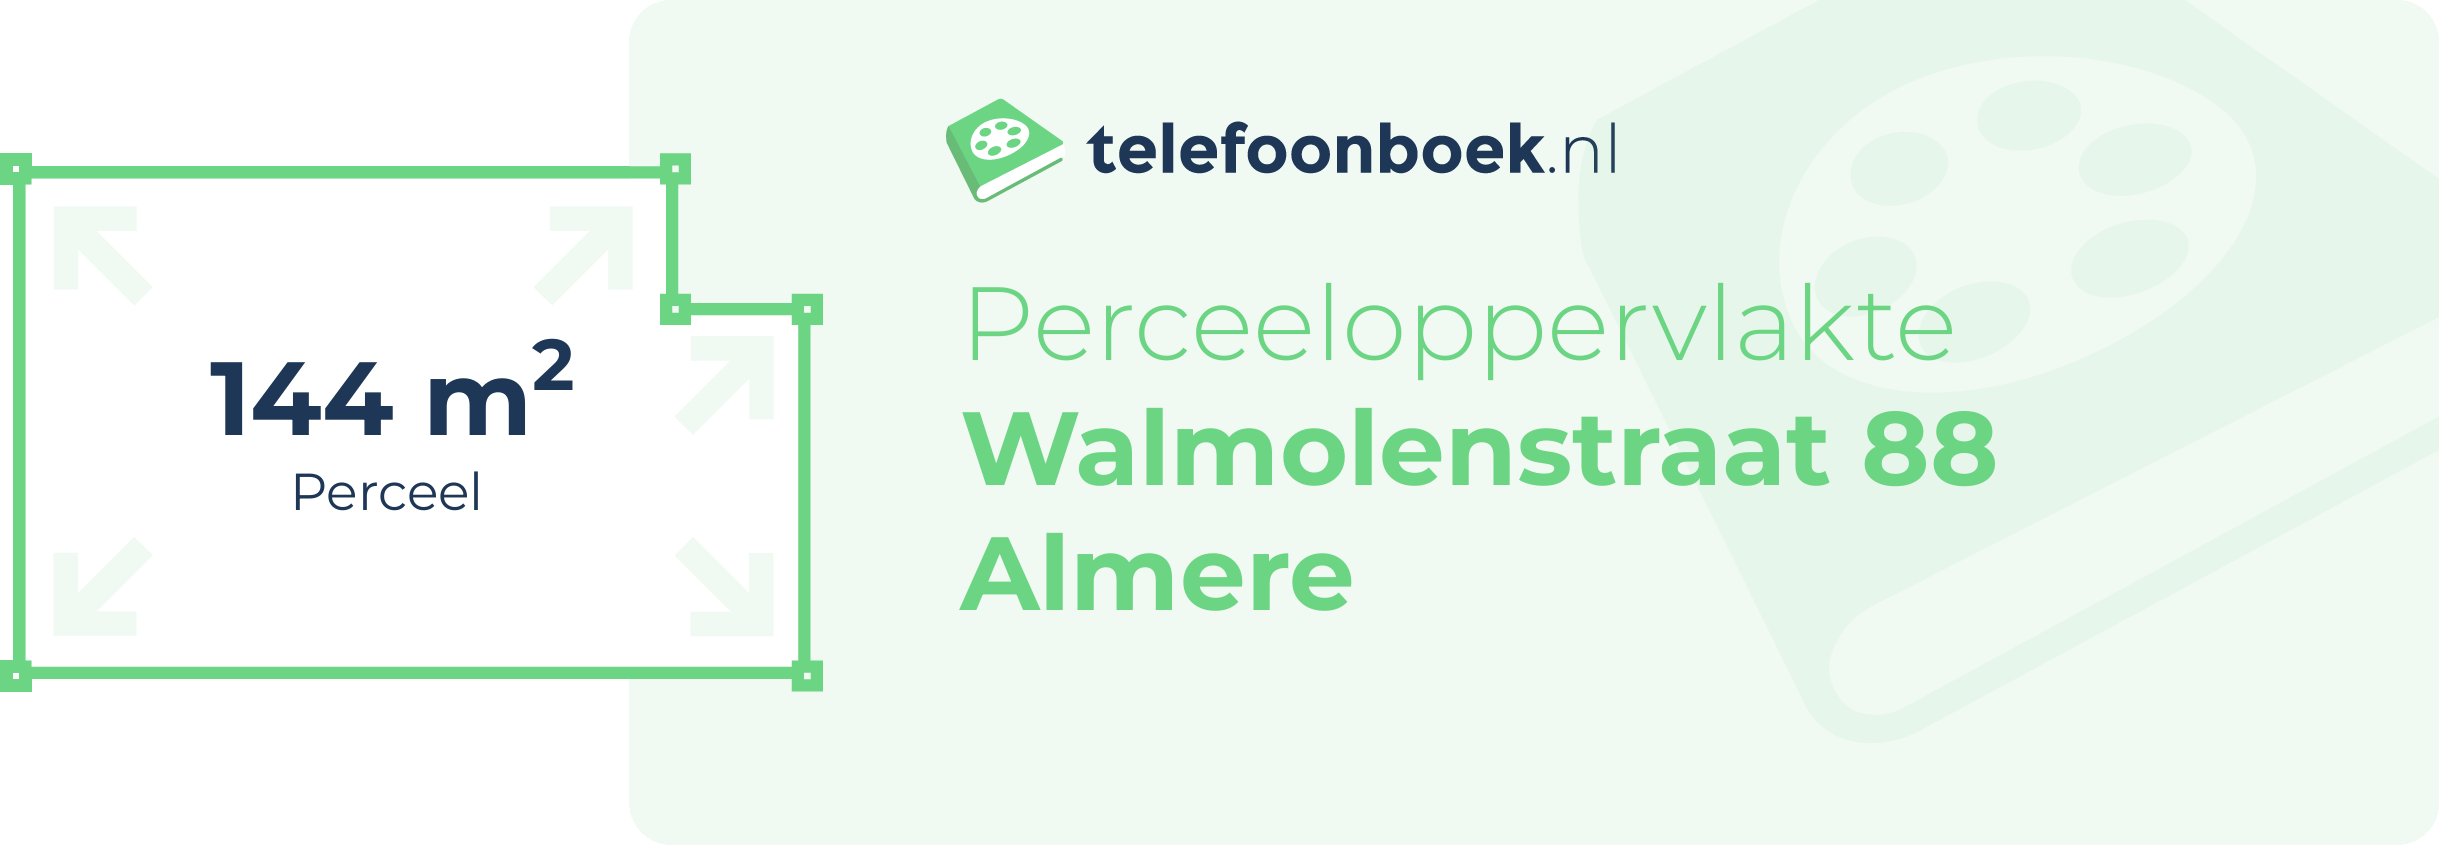 Perceeloppervlakte Walmolenstraat 88 Almere